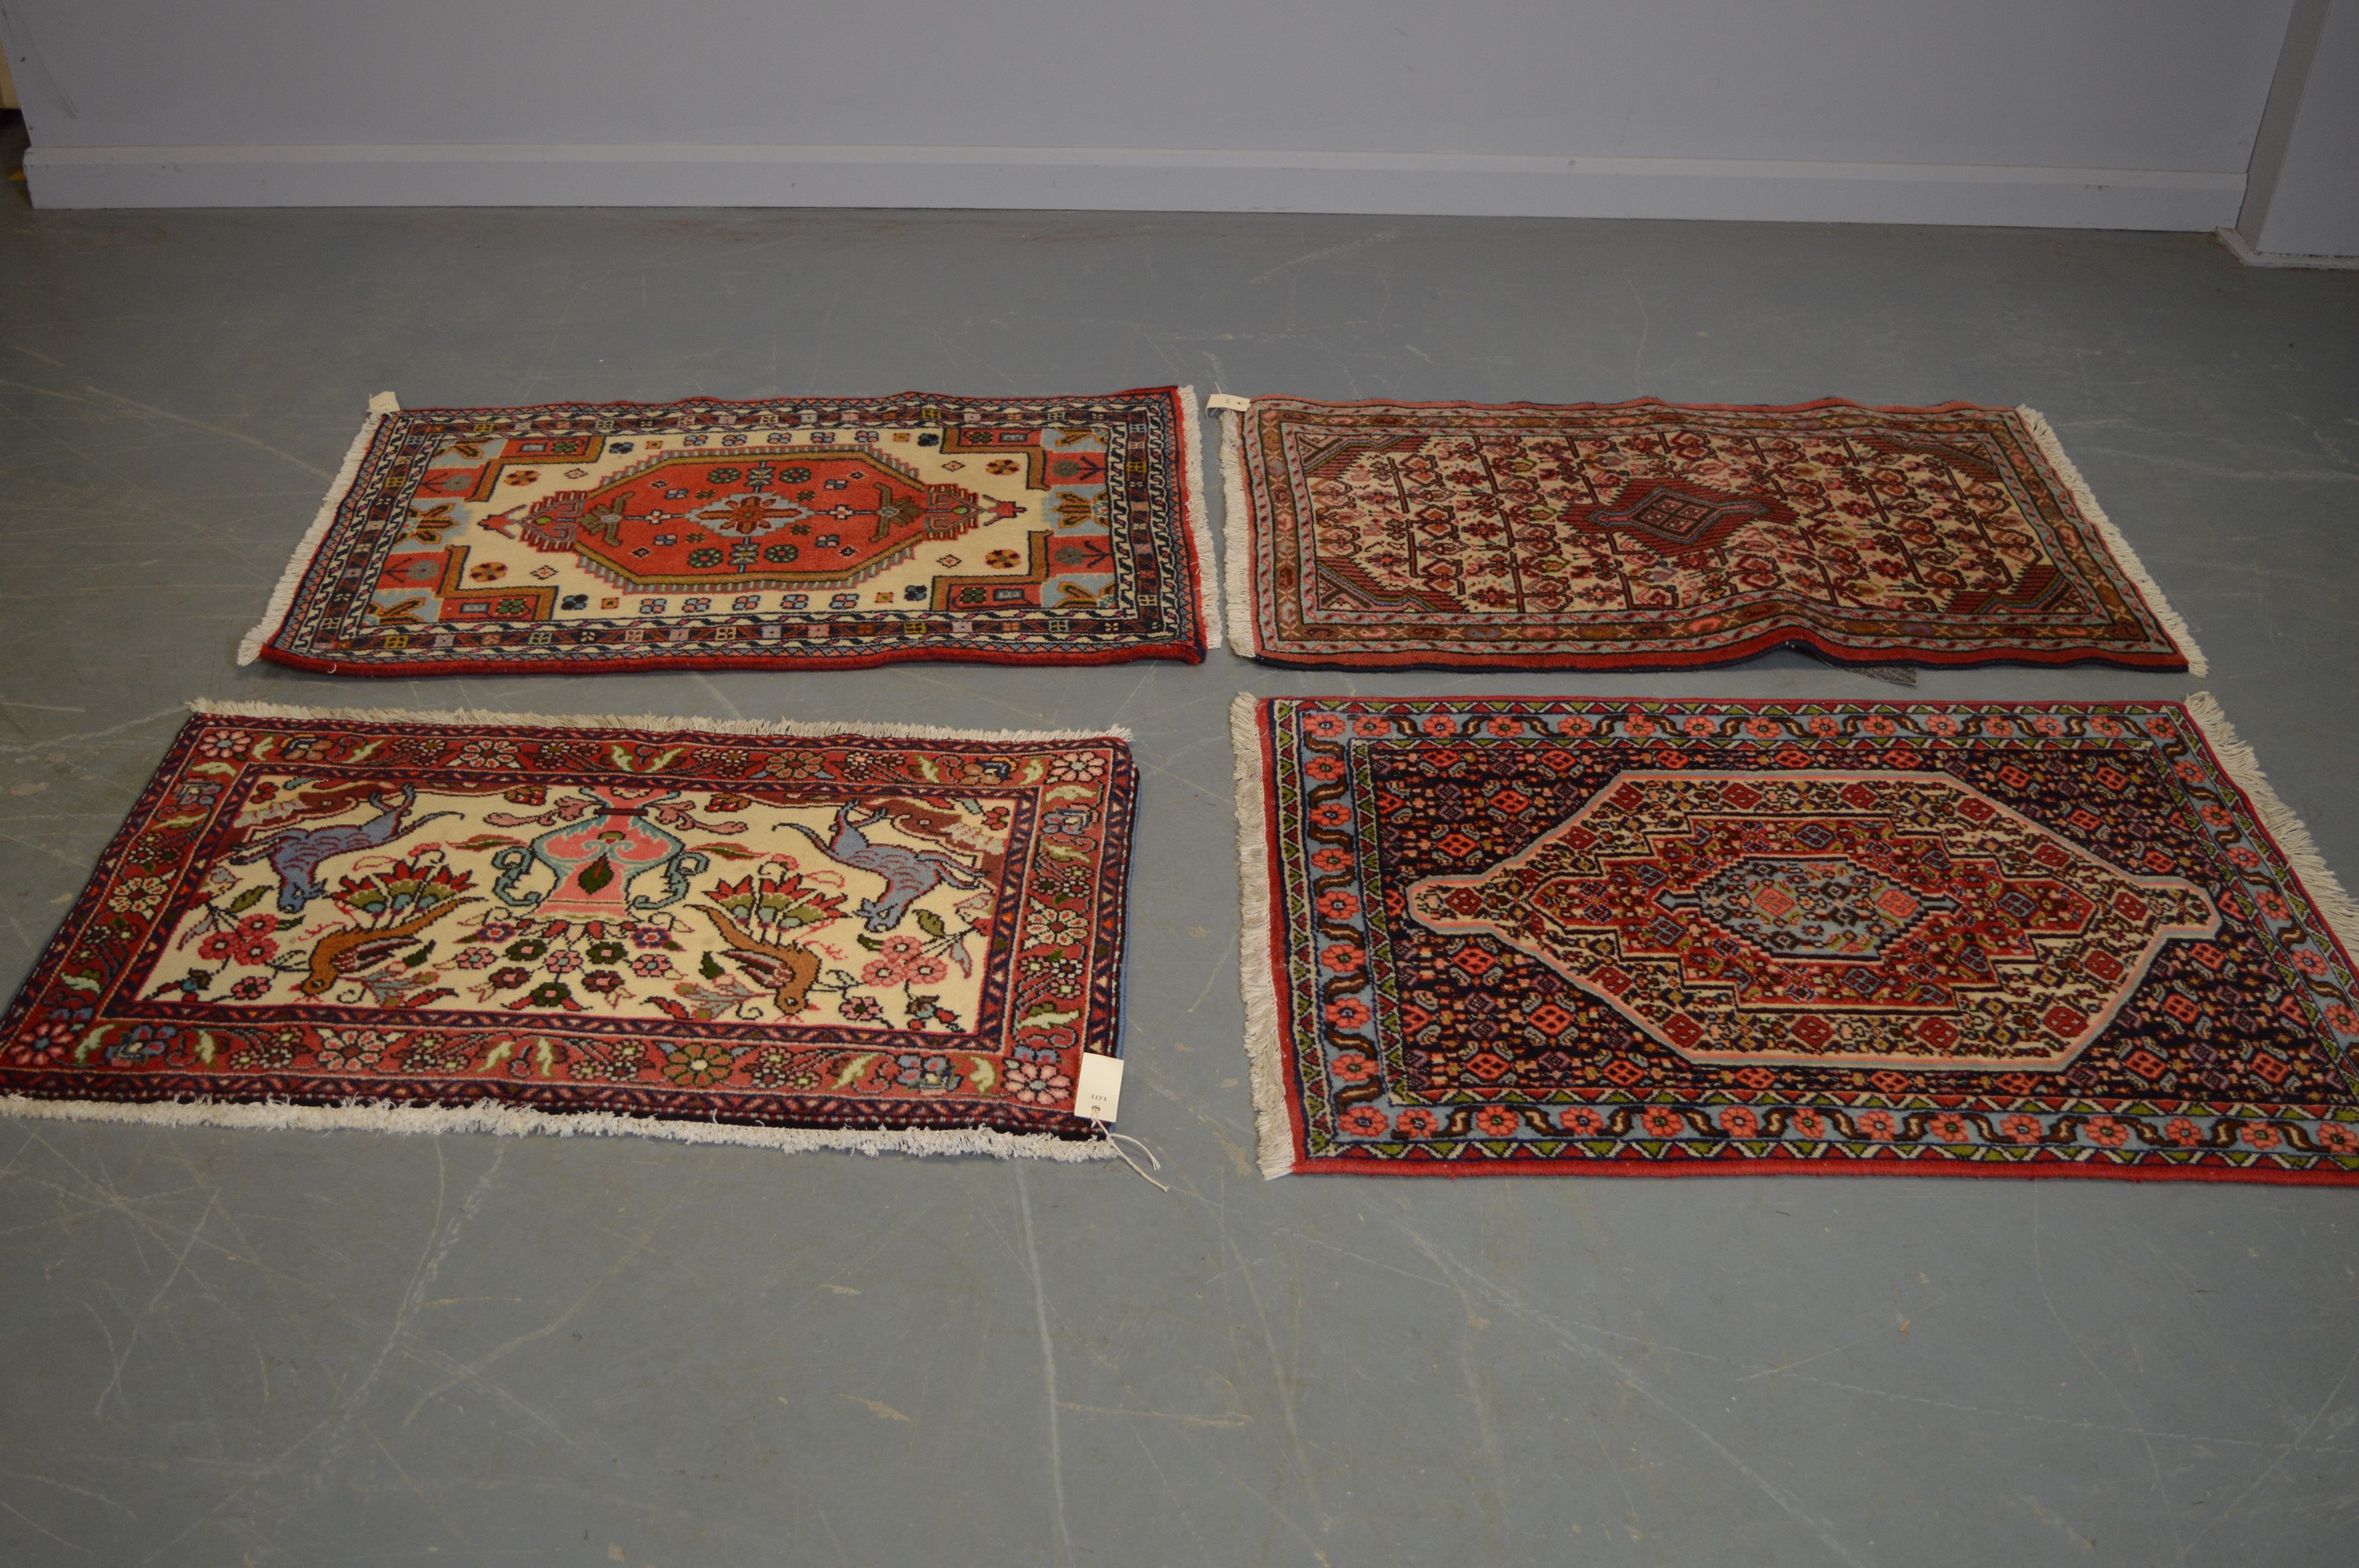 Four modern prayer rugs